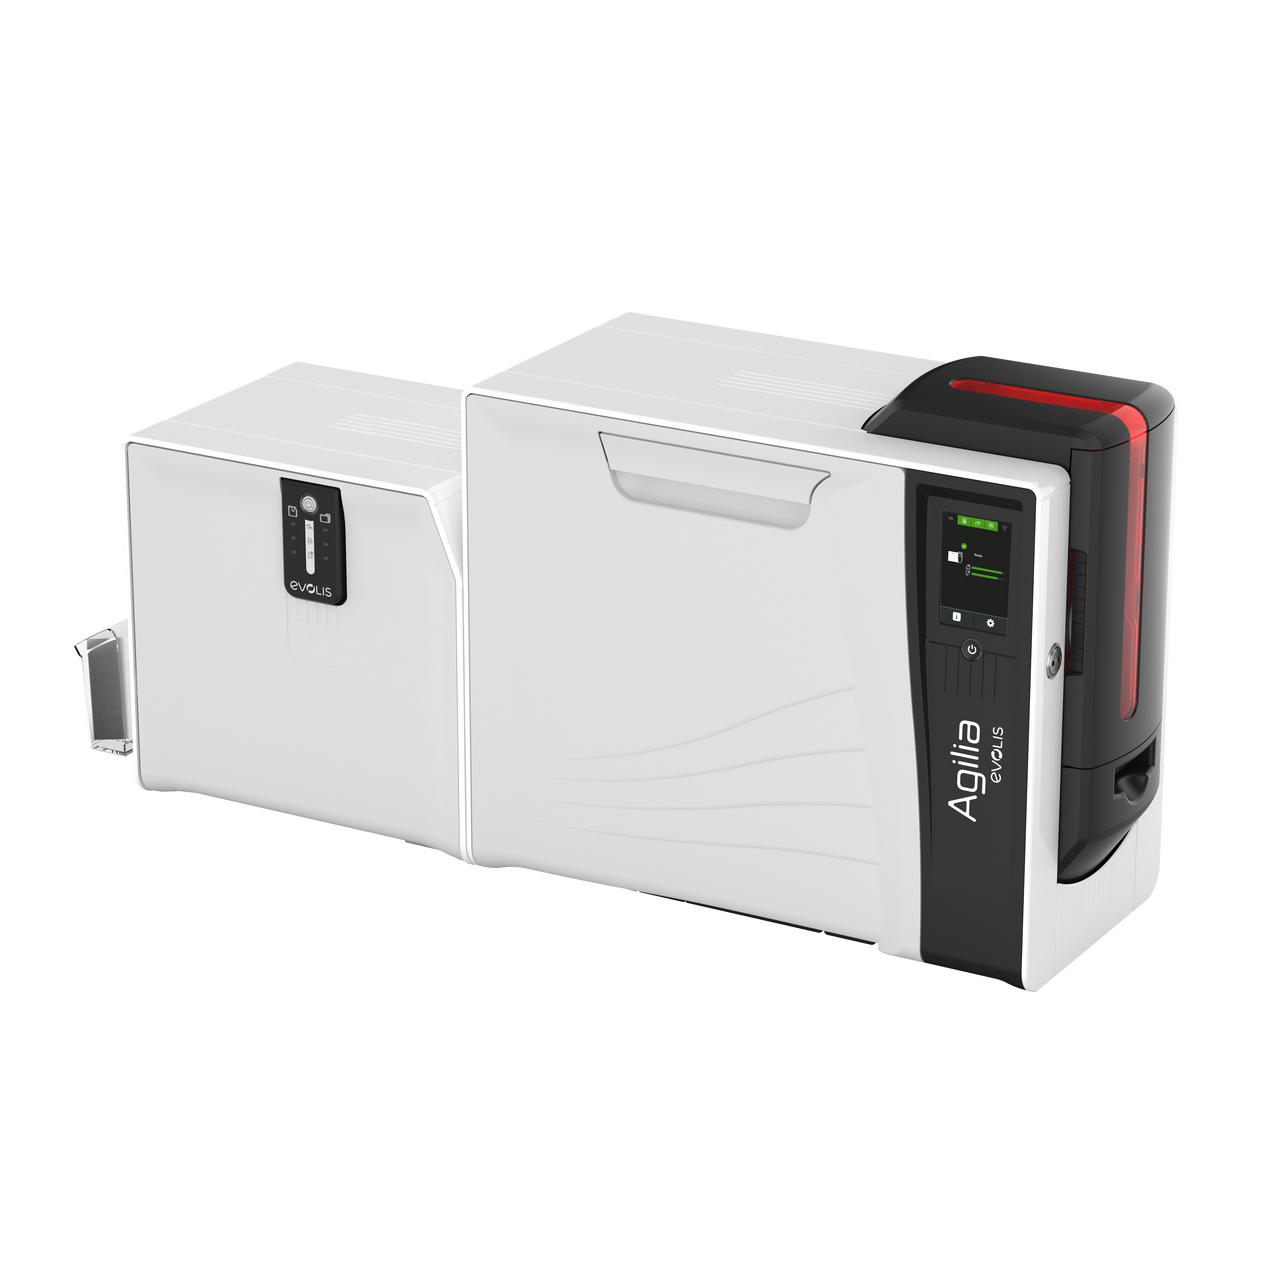 Evolis Agilia Expert Contactless Single-Sided Retransfer ID Card Printer - AG1-0005